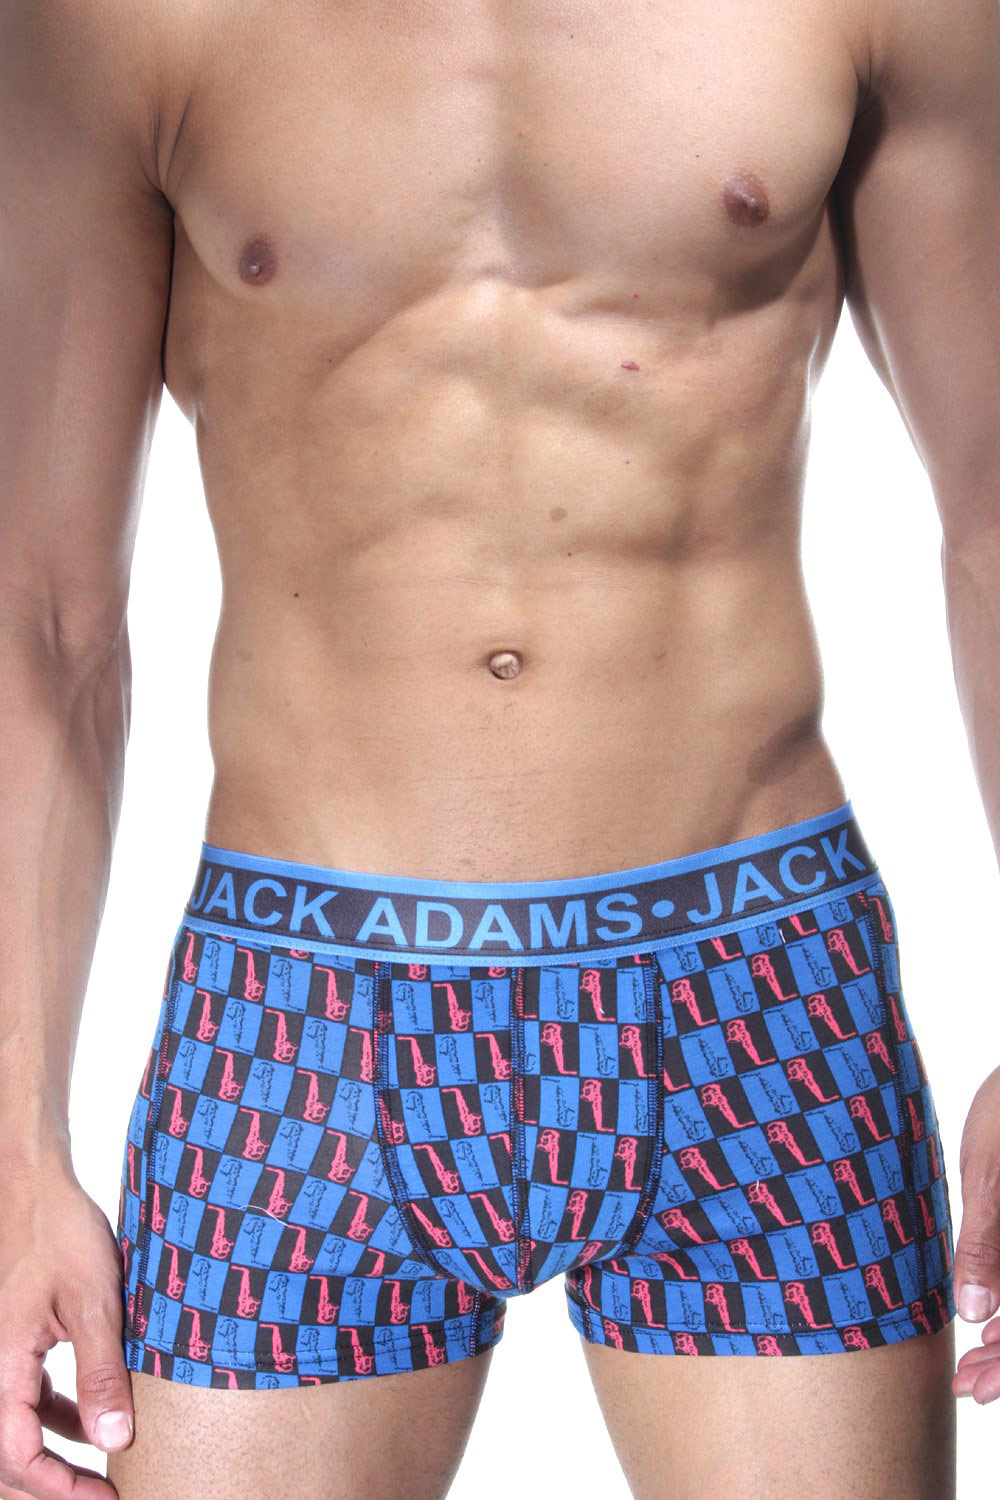 JACK ADAMS trunks at oboy.com